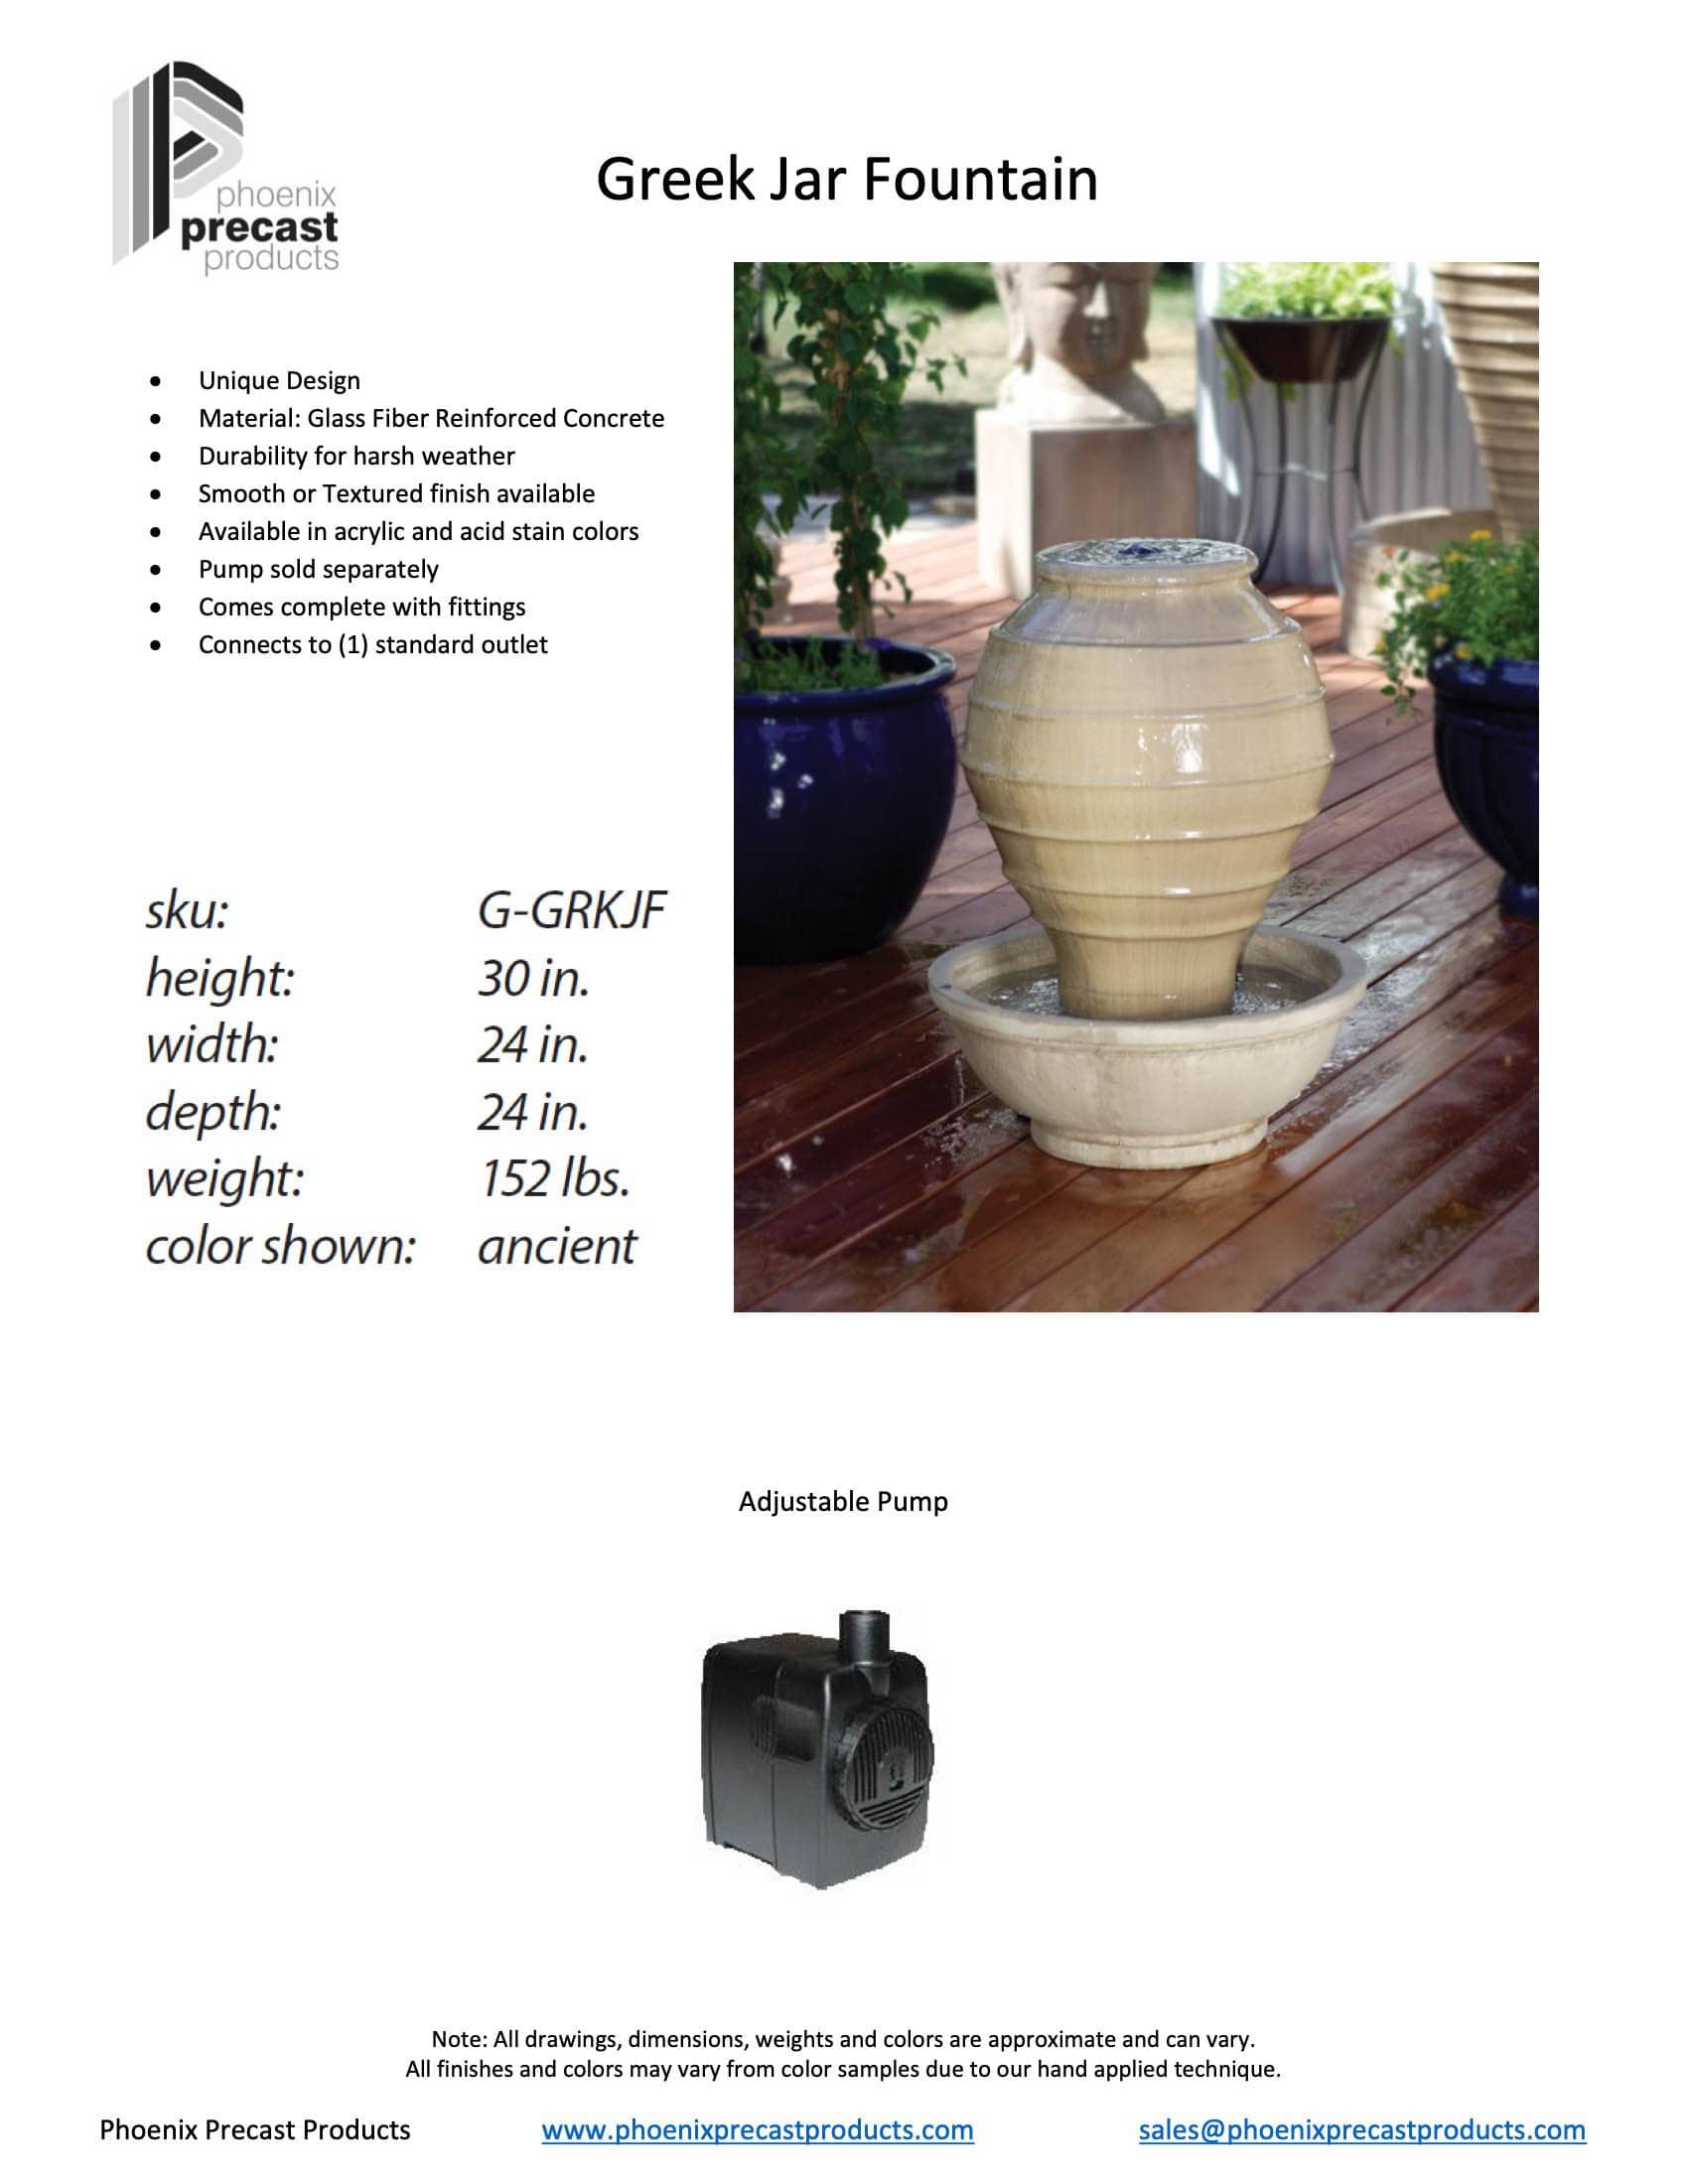 Phoenix Precast Outdoor Fountains Phoenix Precast Greek Jar 24" Wide Concrete Outdoor Fountain G-GRKJF-